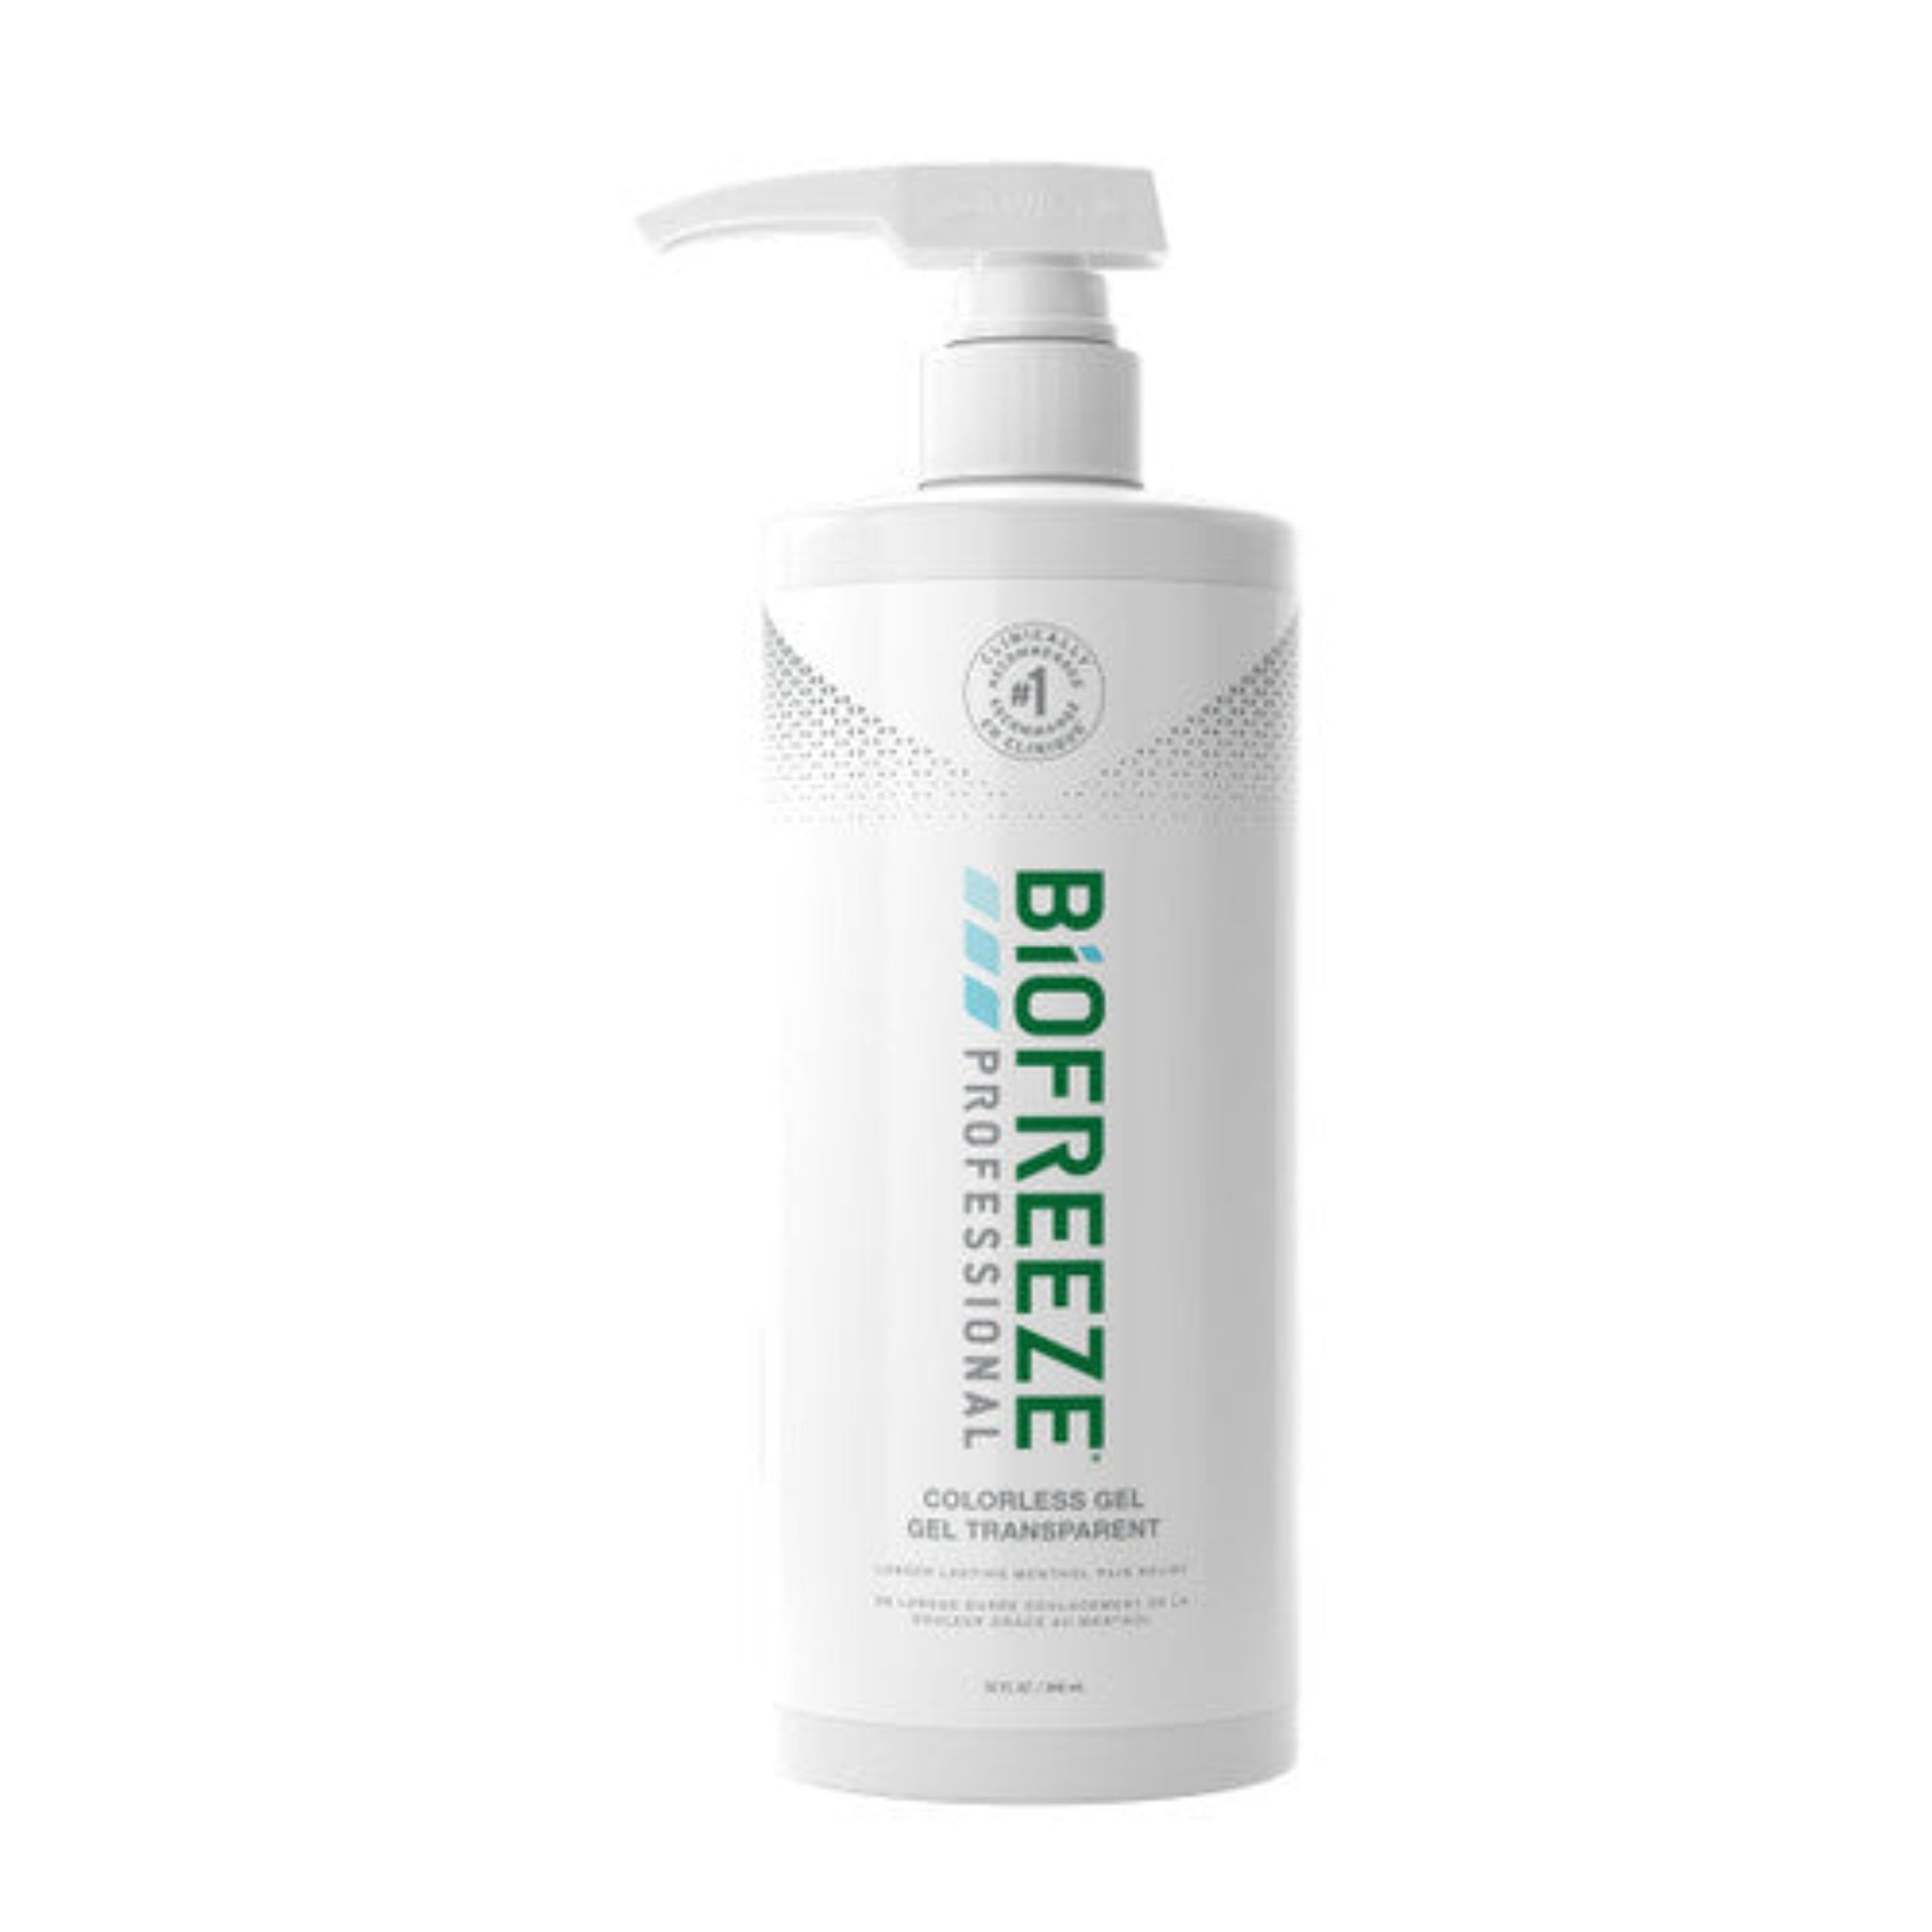 Biofreeze Professional Colourless Gell 32 oz